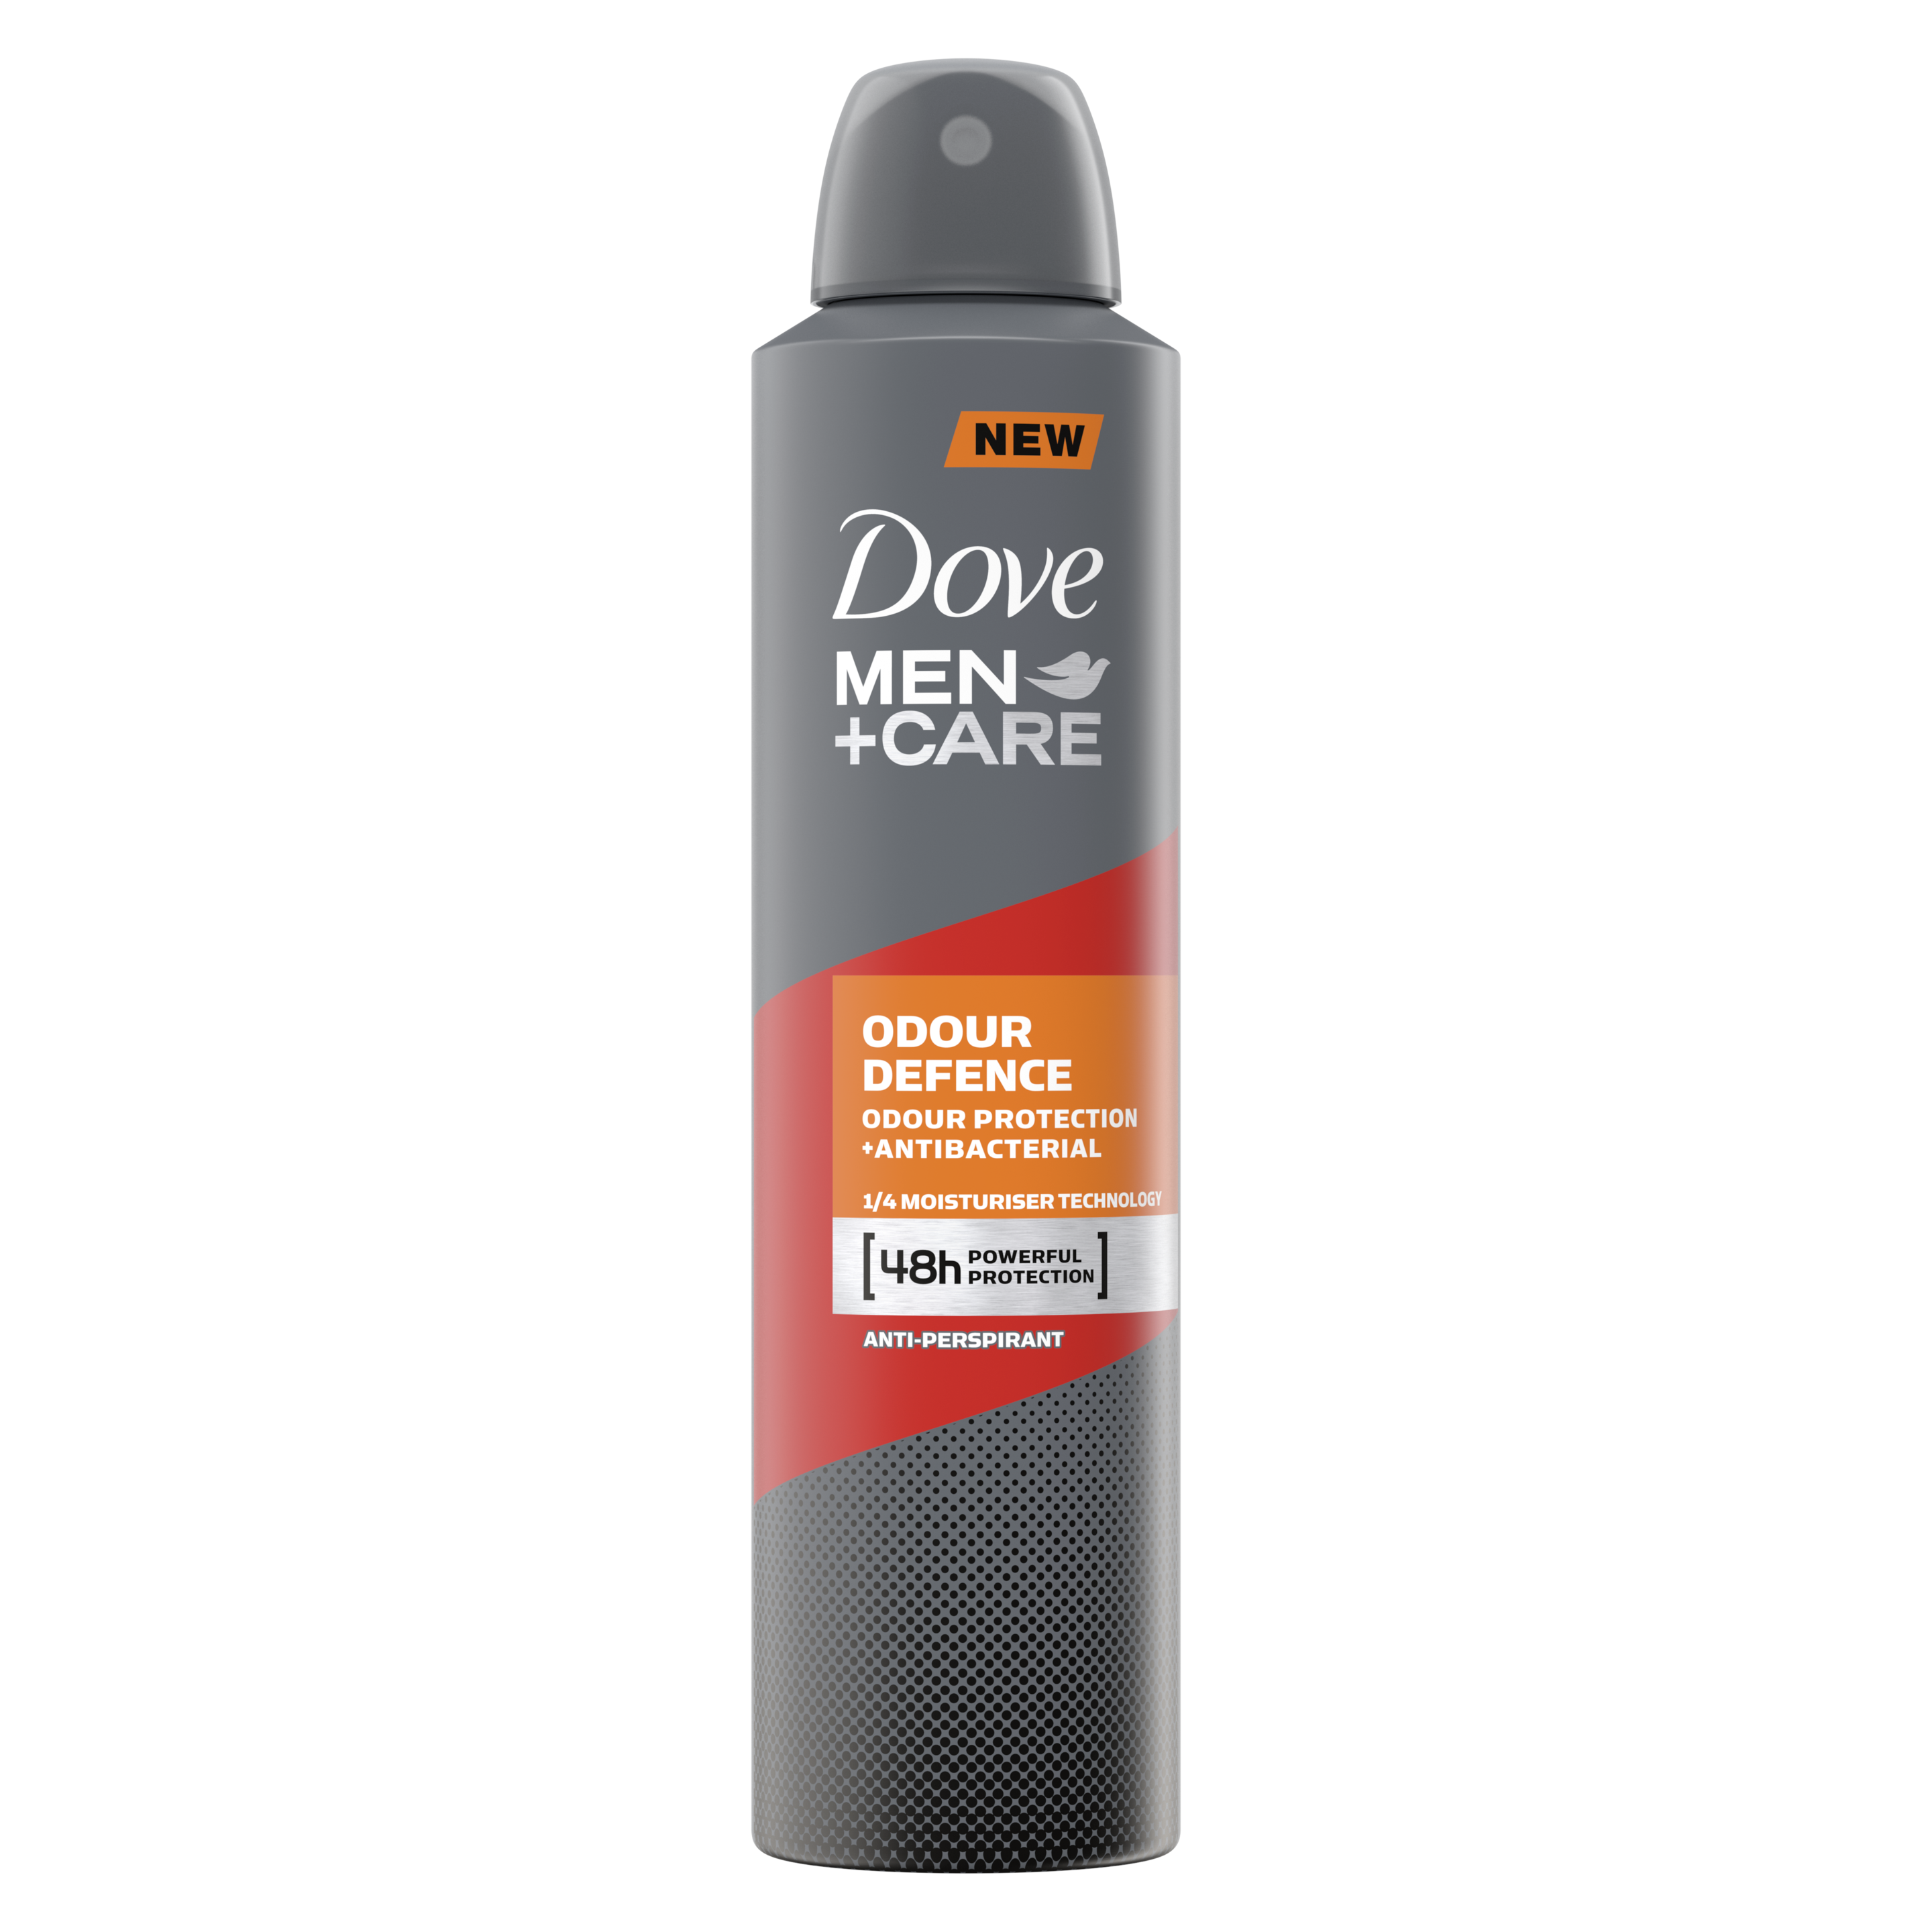 Men+Care Odour Defence Antiperspirant Deodorant